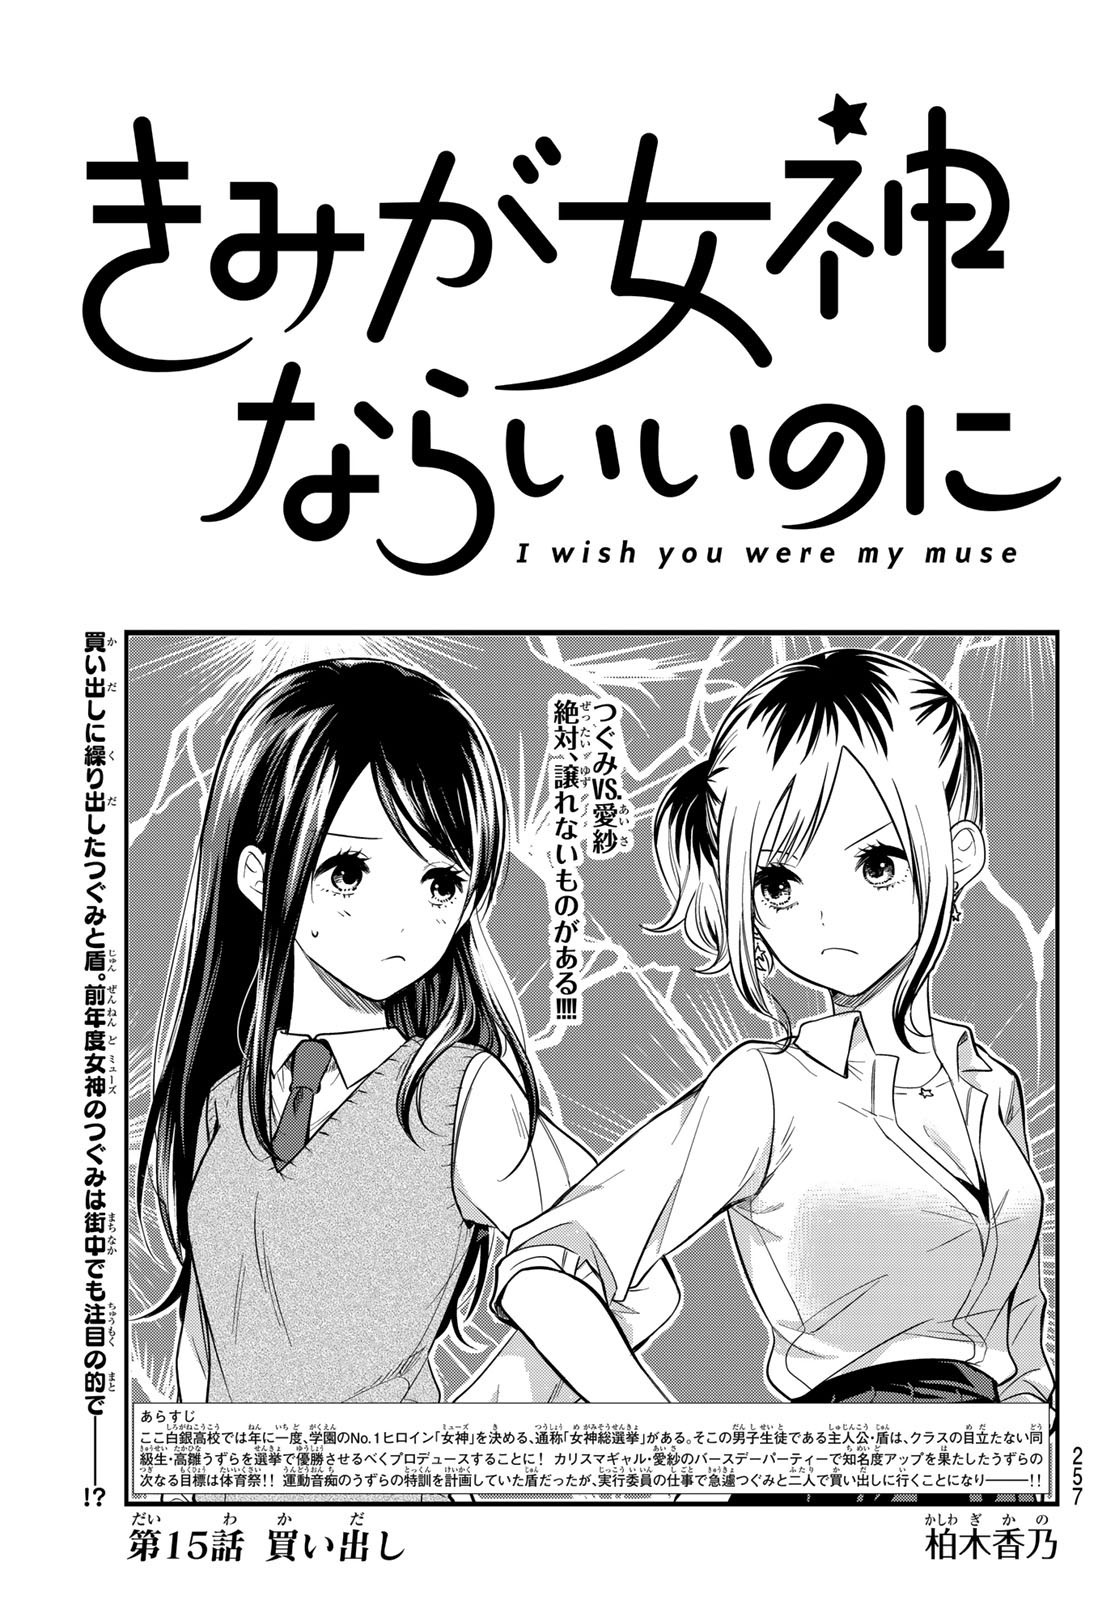 Kimi ga Megami Nara Ii no ni (I Wish You Were My Muse) - Chapter 015 - Page 1